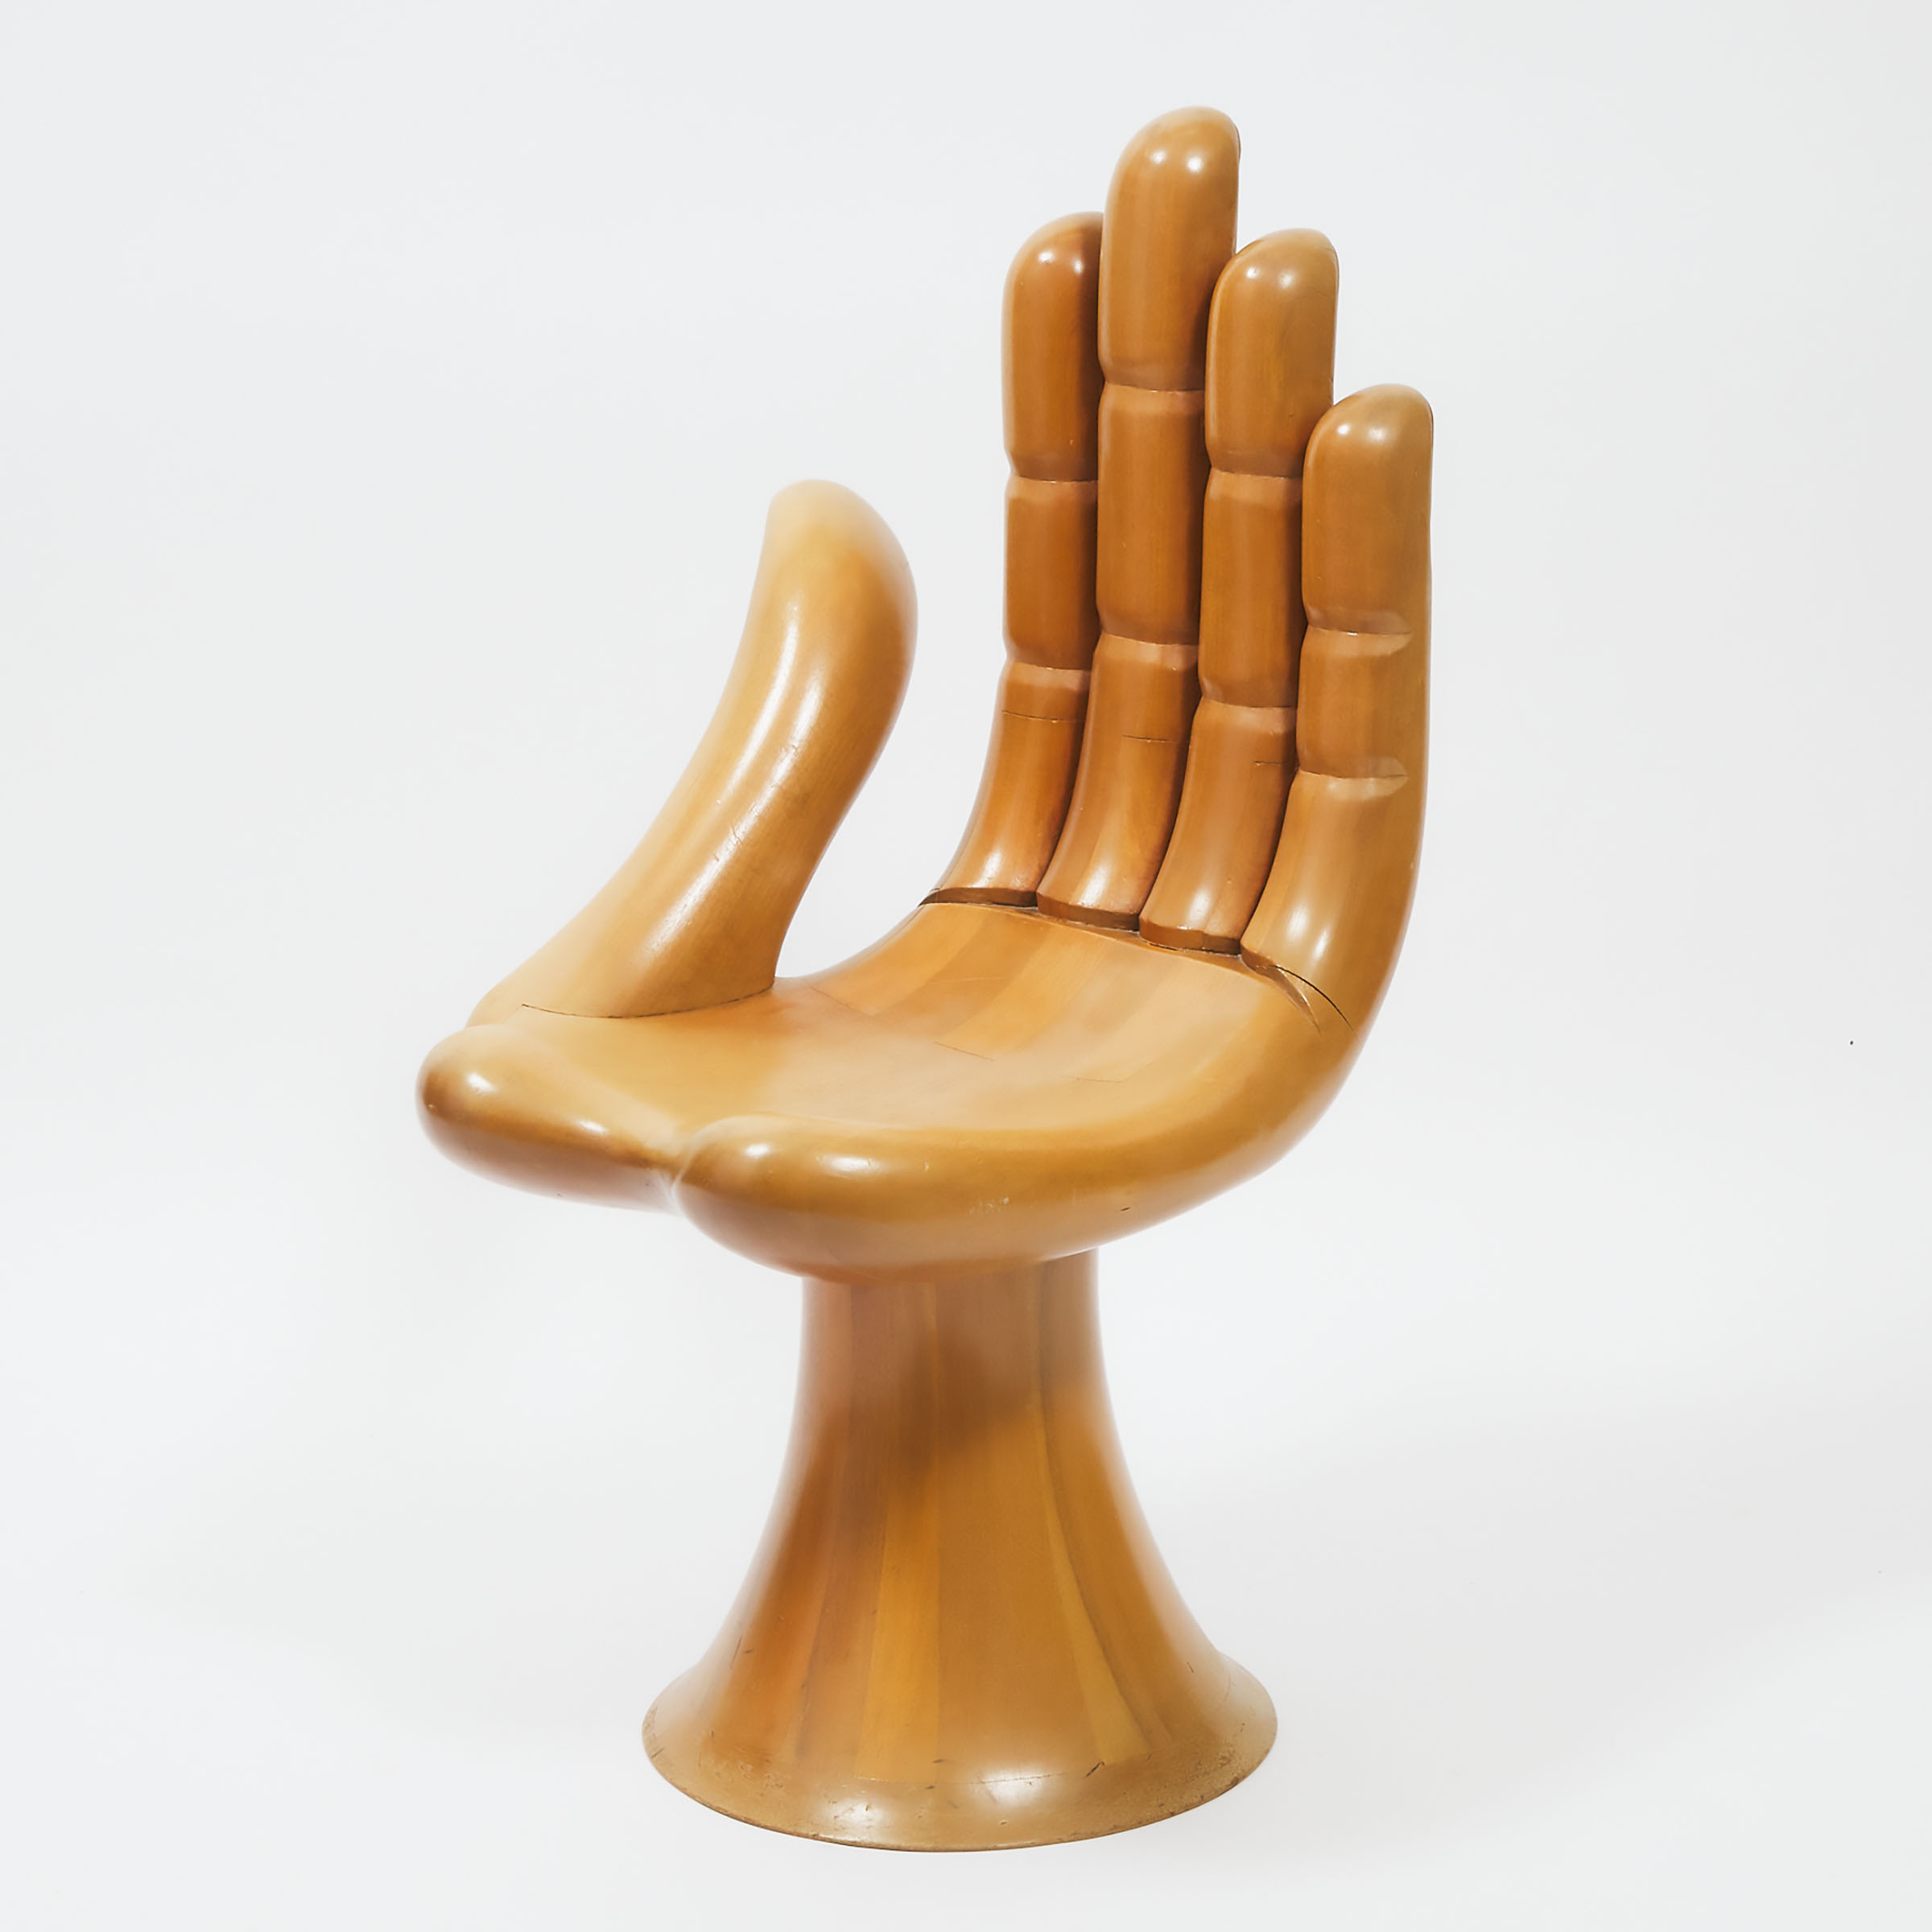 Pedro Friedeberg (Mexican/Italian, b.1937) Hand Chair, c.1965